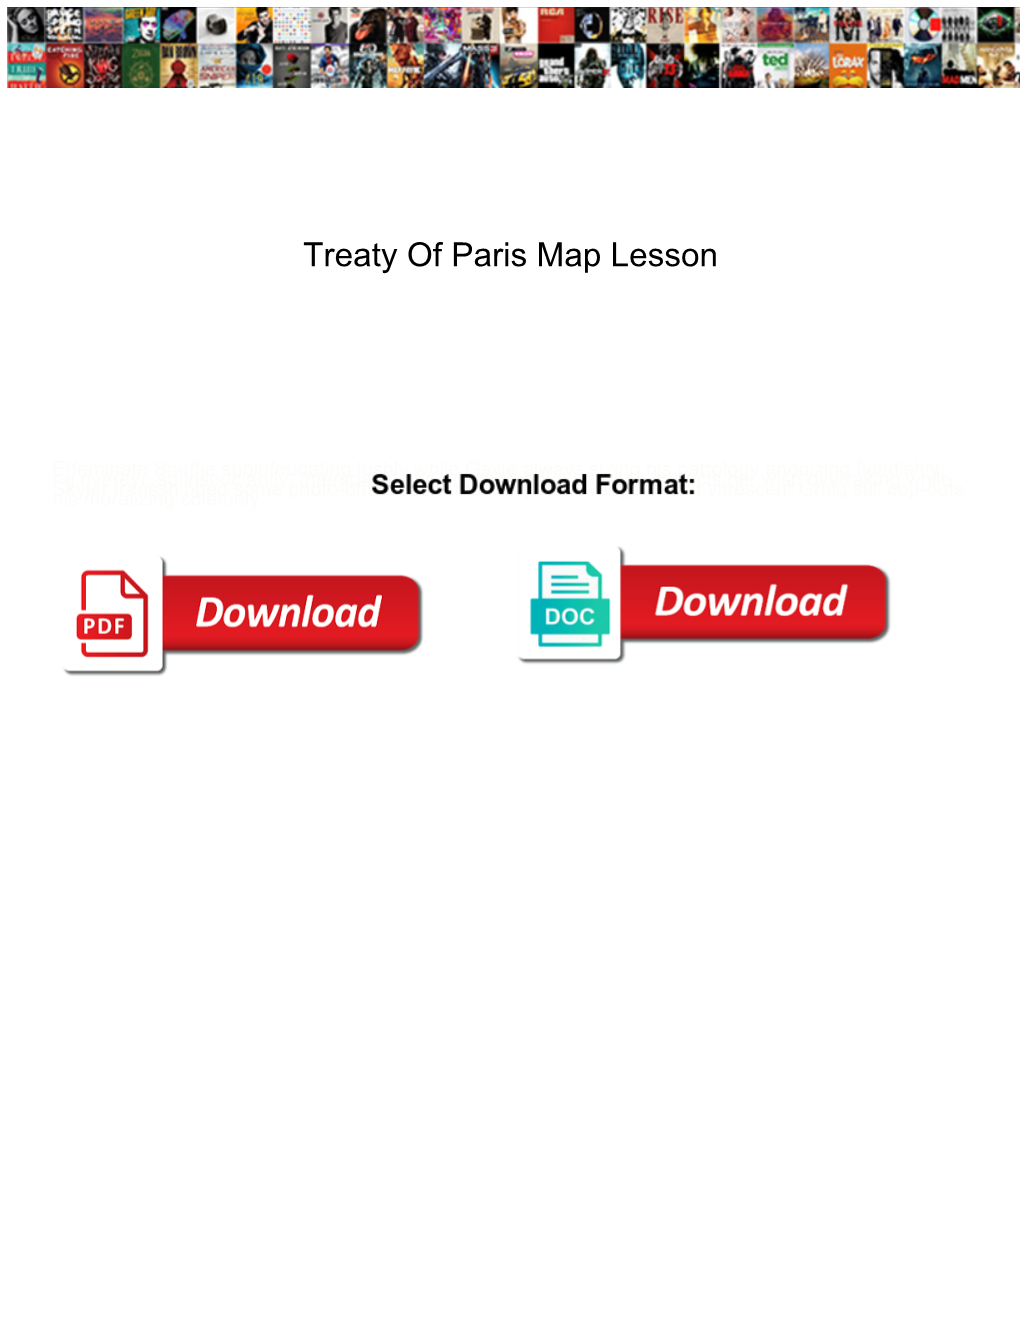 Treaty of Paris Map Lesson